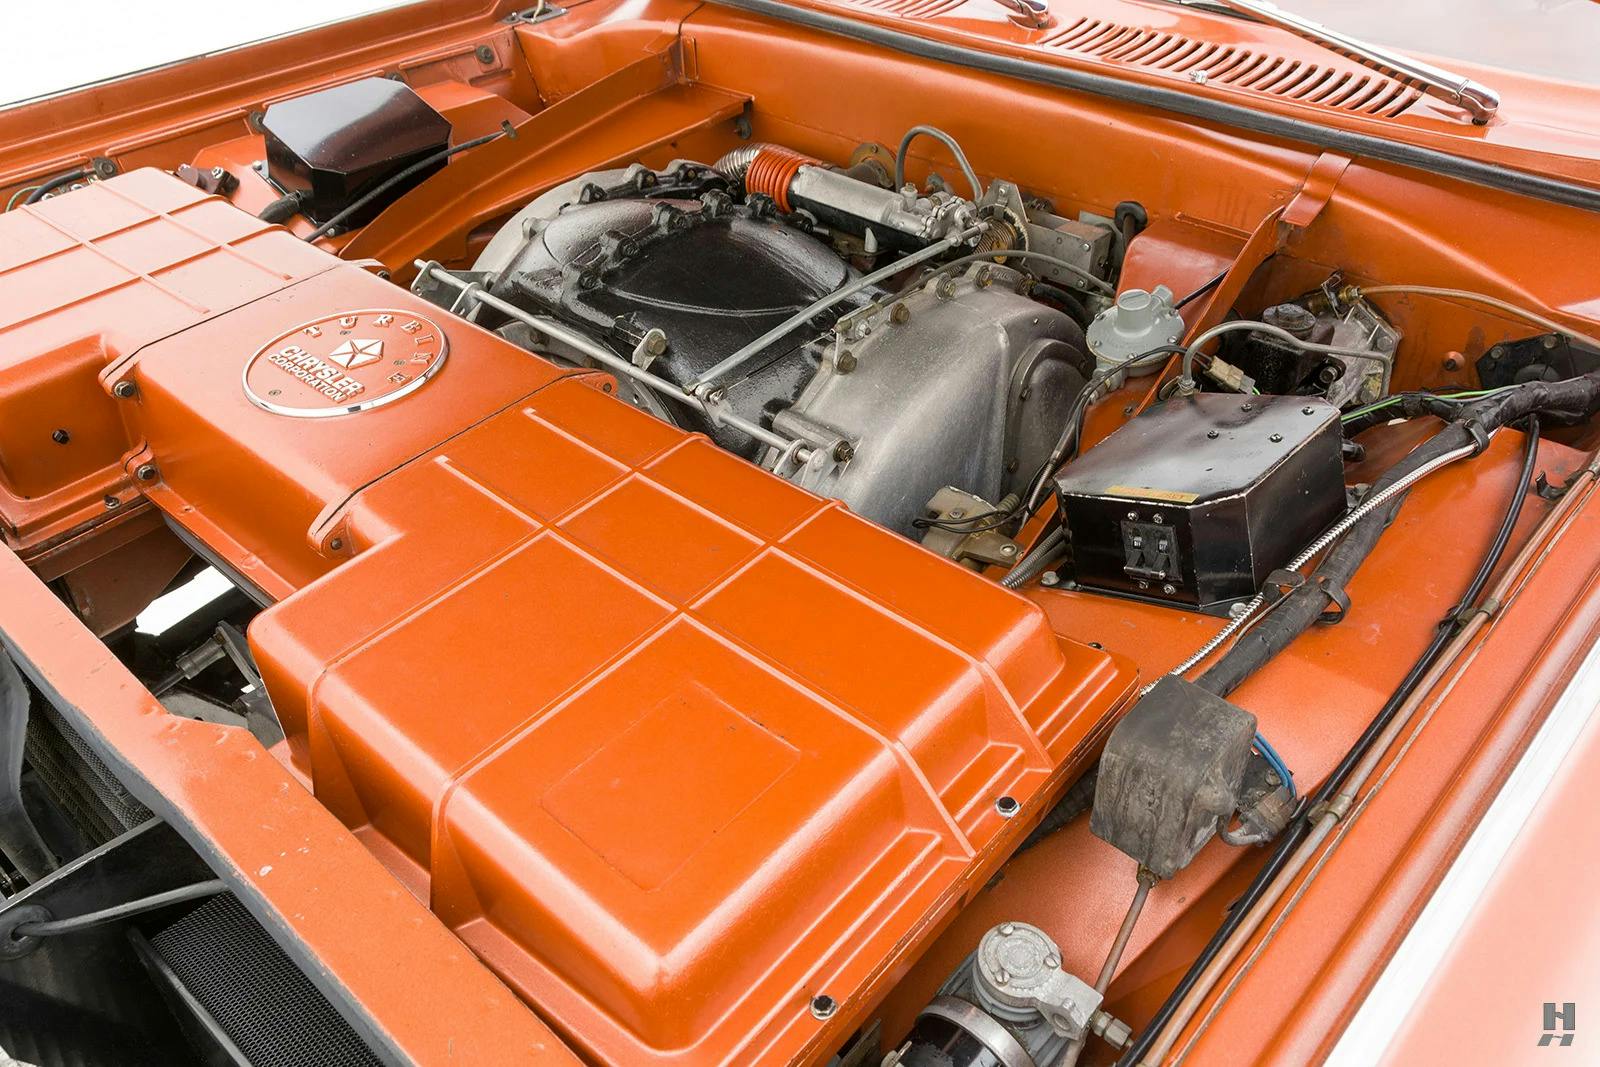 1963 Chrysler Turbine Car engine bay angled